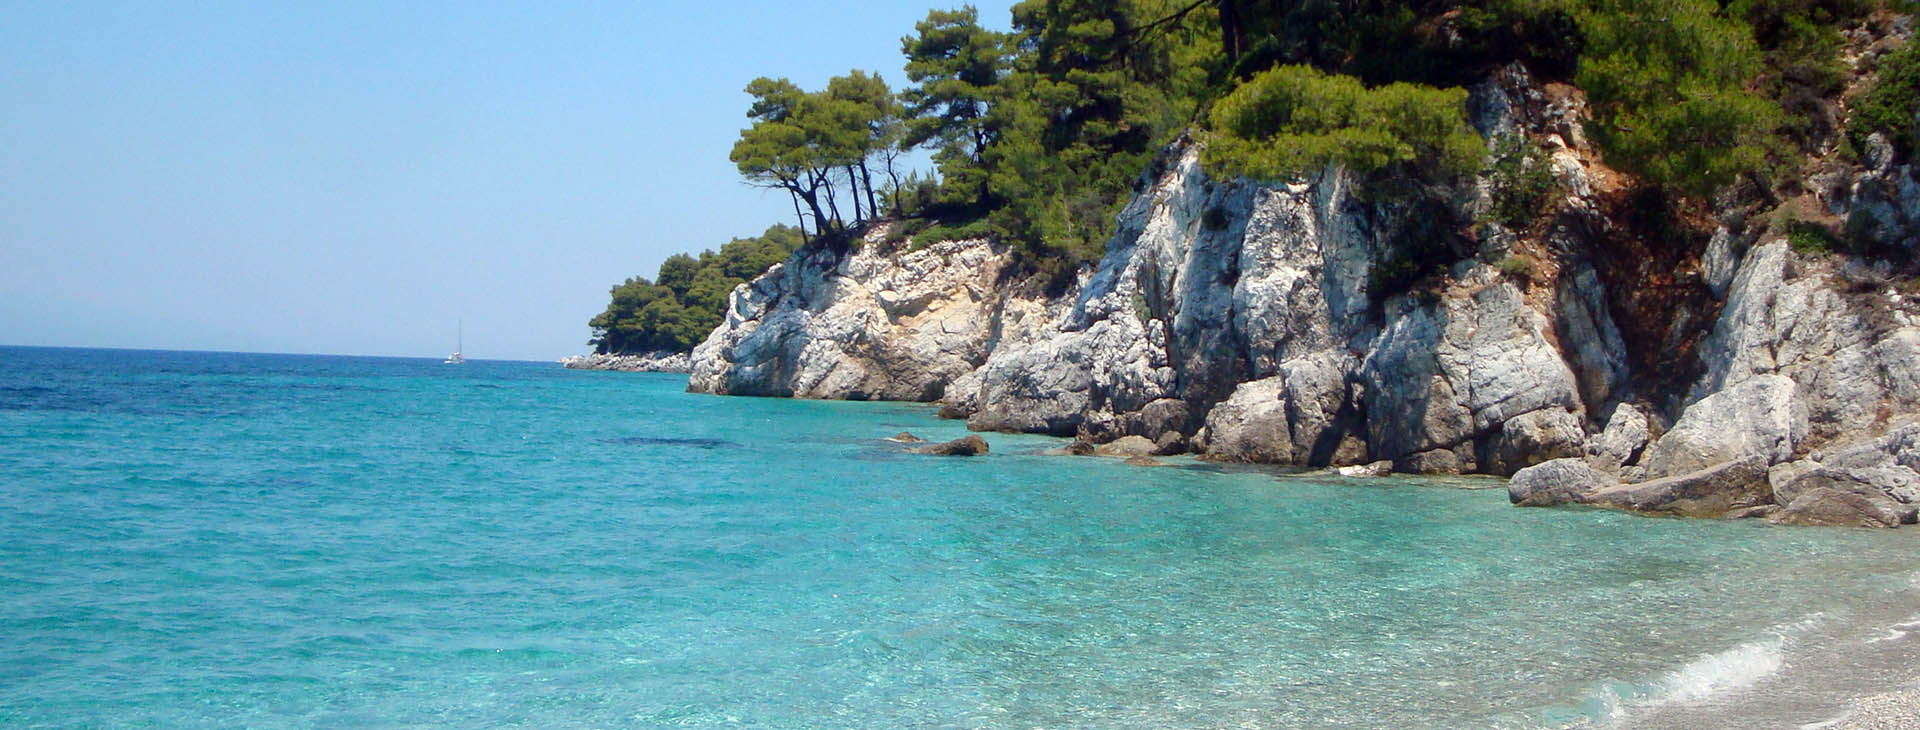 Kastani beach, Skopelos